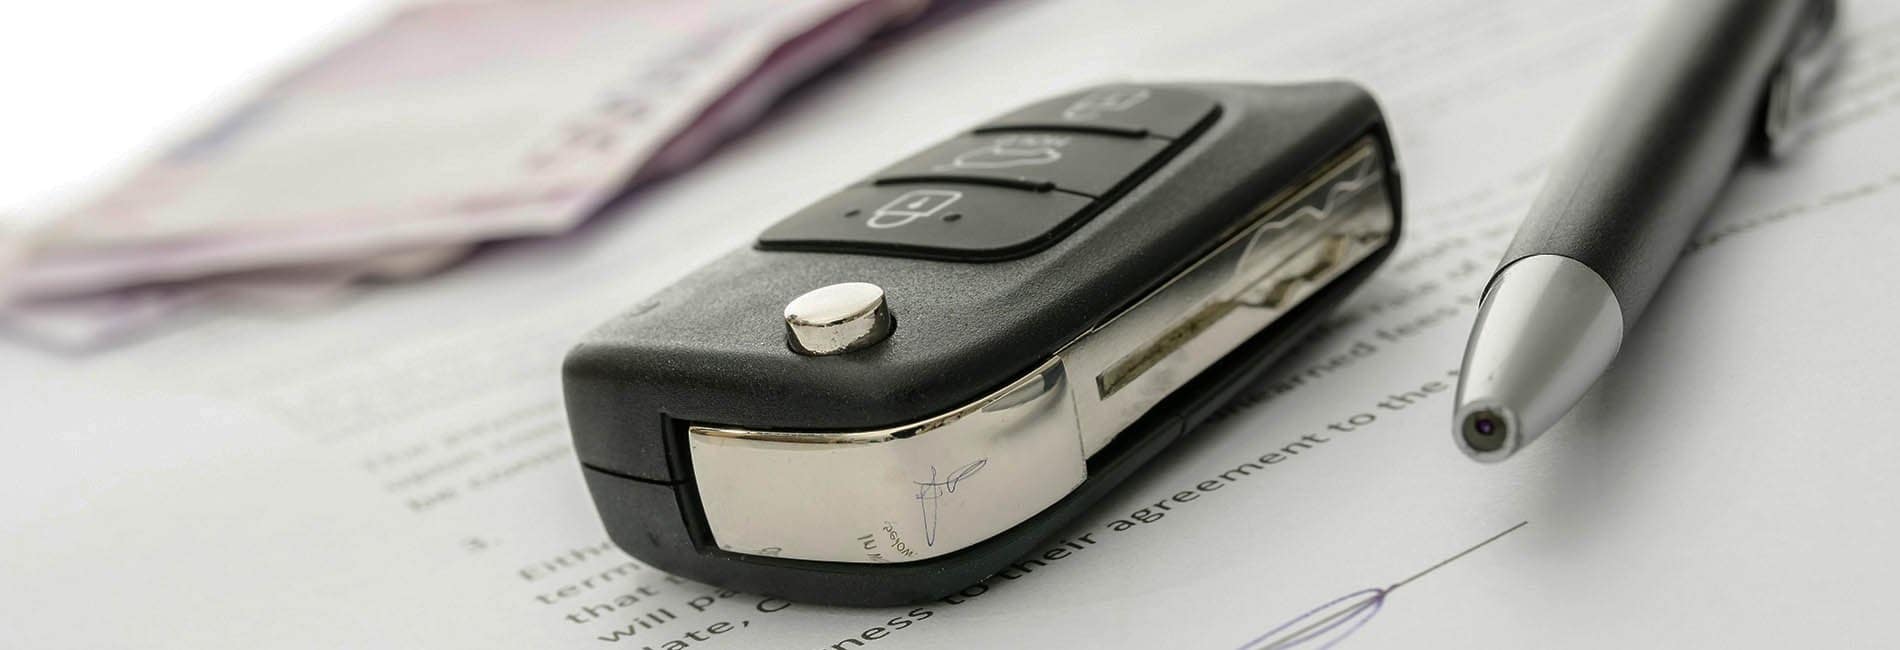 Car key lying on finance docs